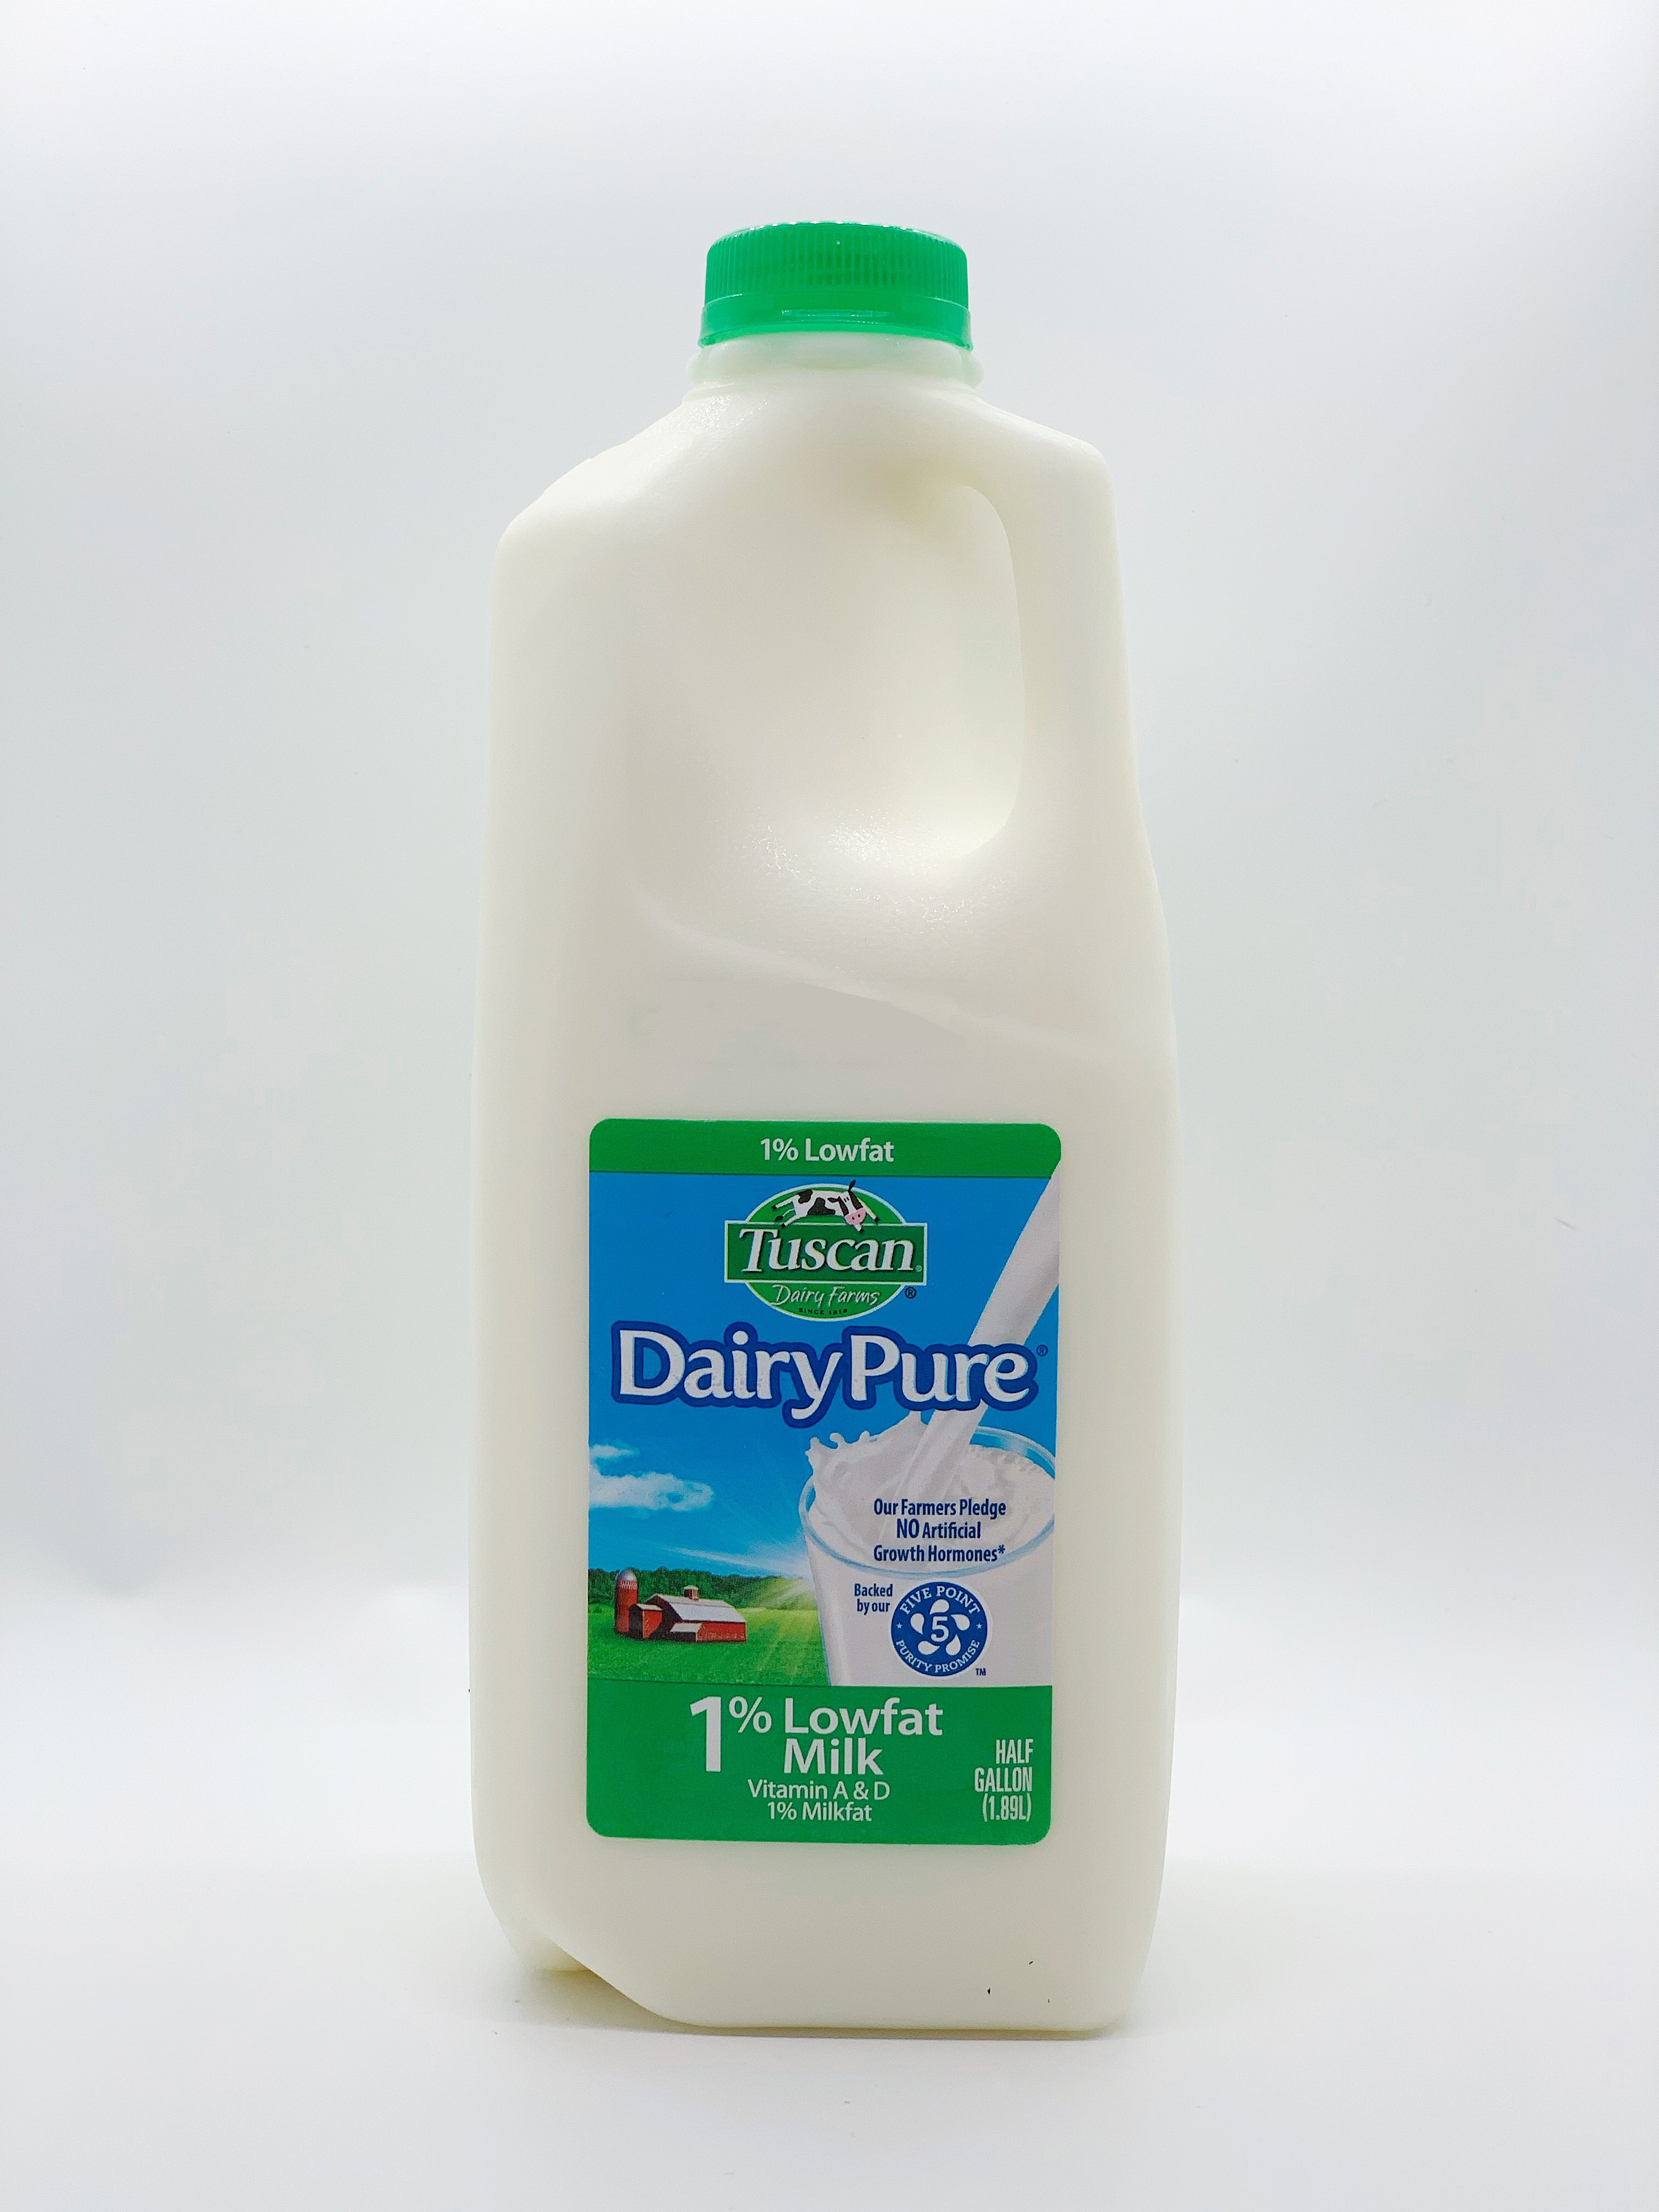 2 Litre Whole Milk Poly Bottle, Fresh Milk, Local Milk Delivery